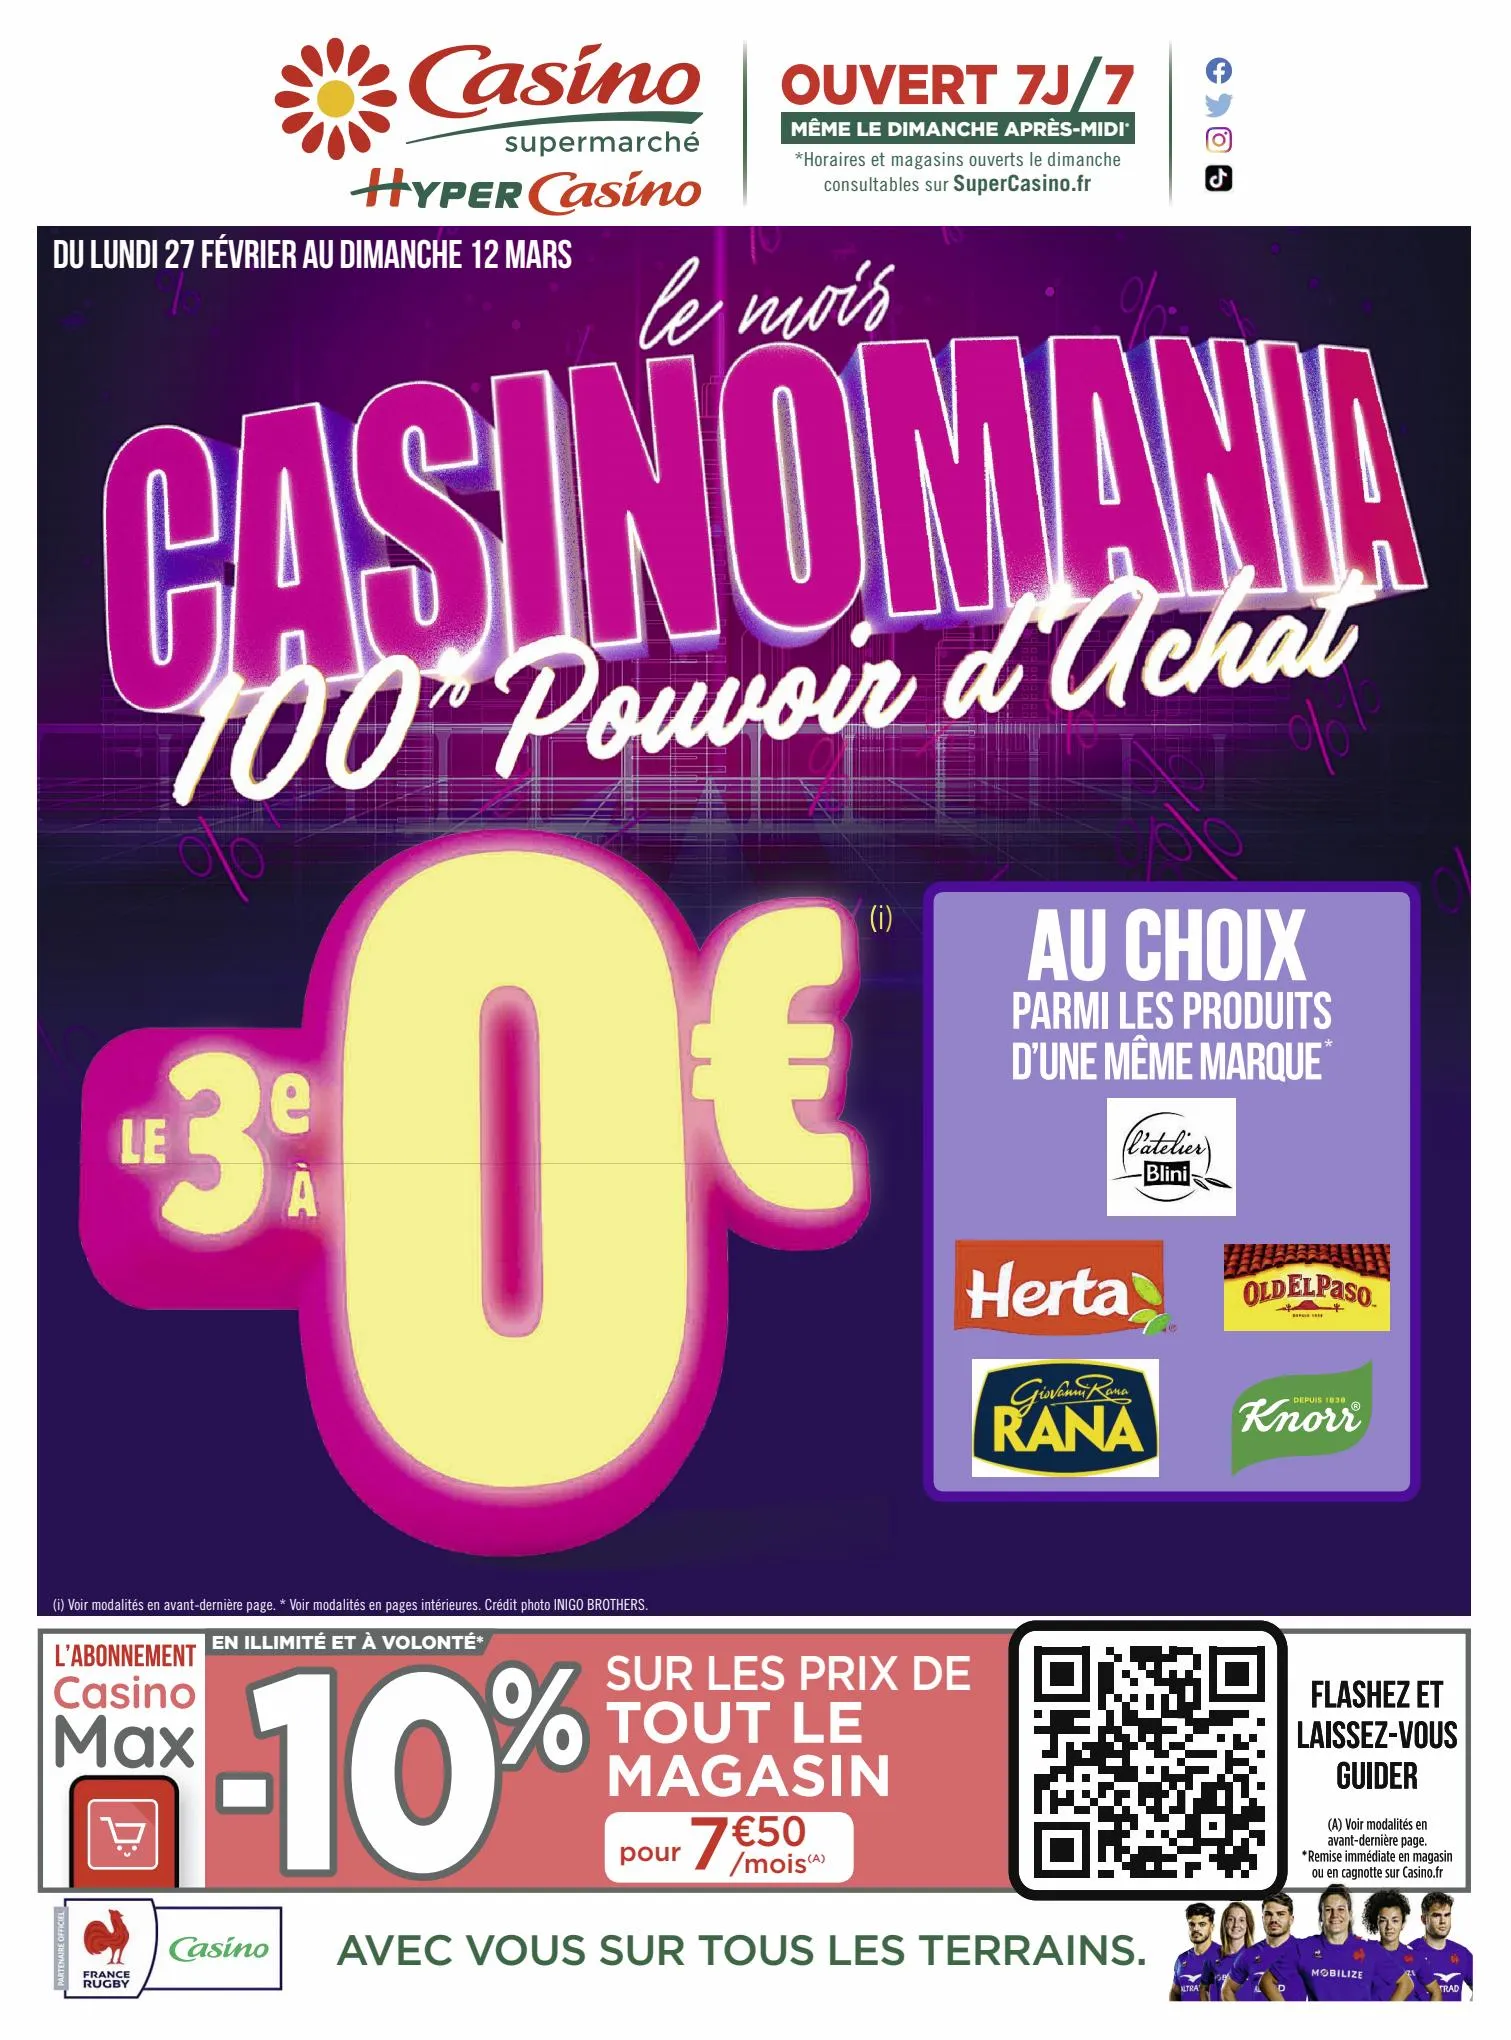 Catalogue Catalogue Hypermarché Casino, page 00001